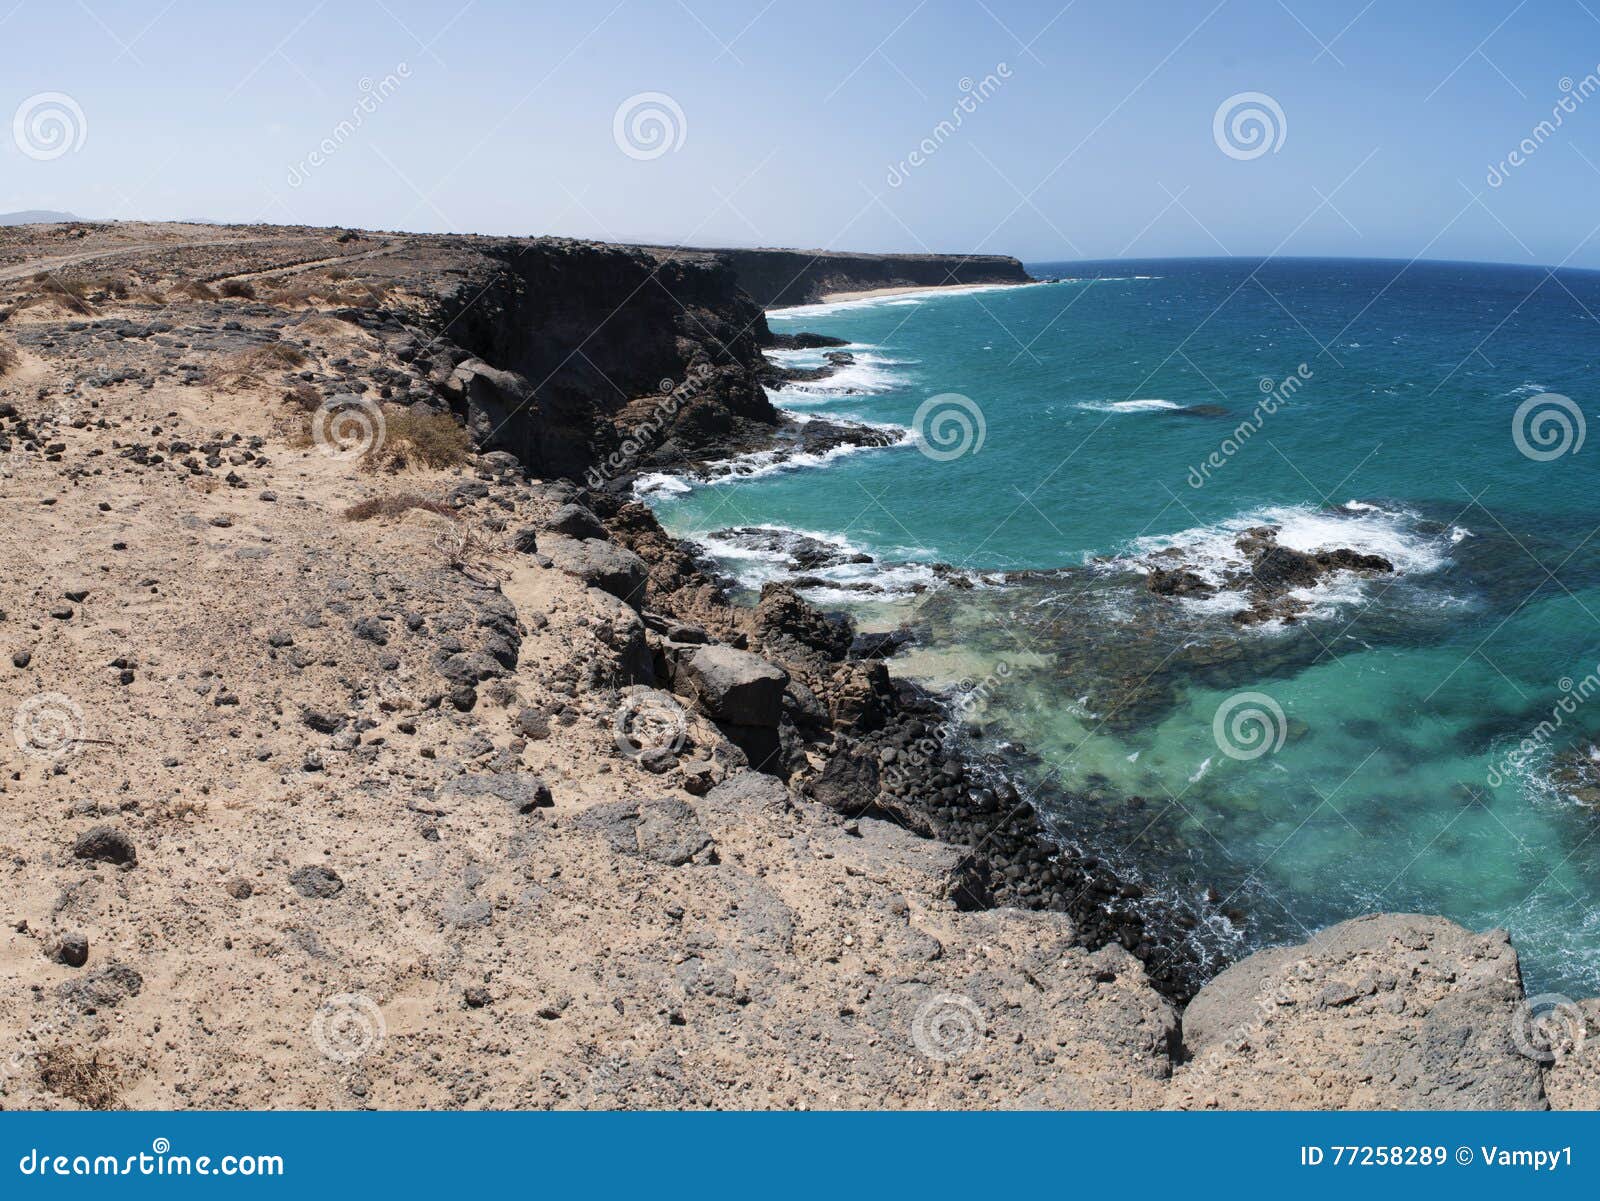 fuerteventura, canary islands, spain, beach, sand, rocks, cliff, escalera, waves, ocean, nature, landscape, desert